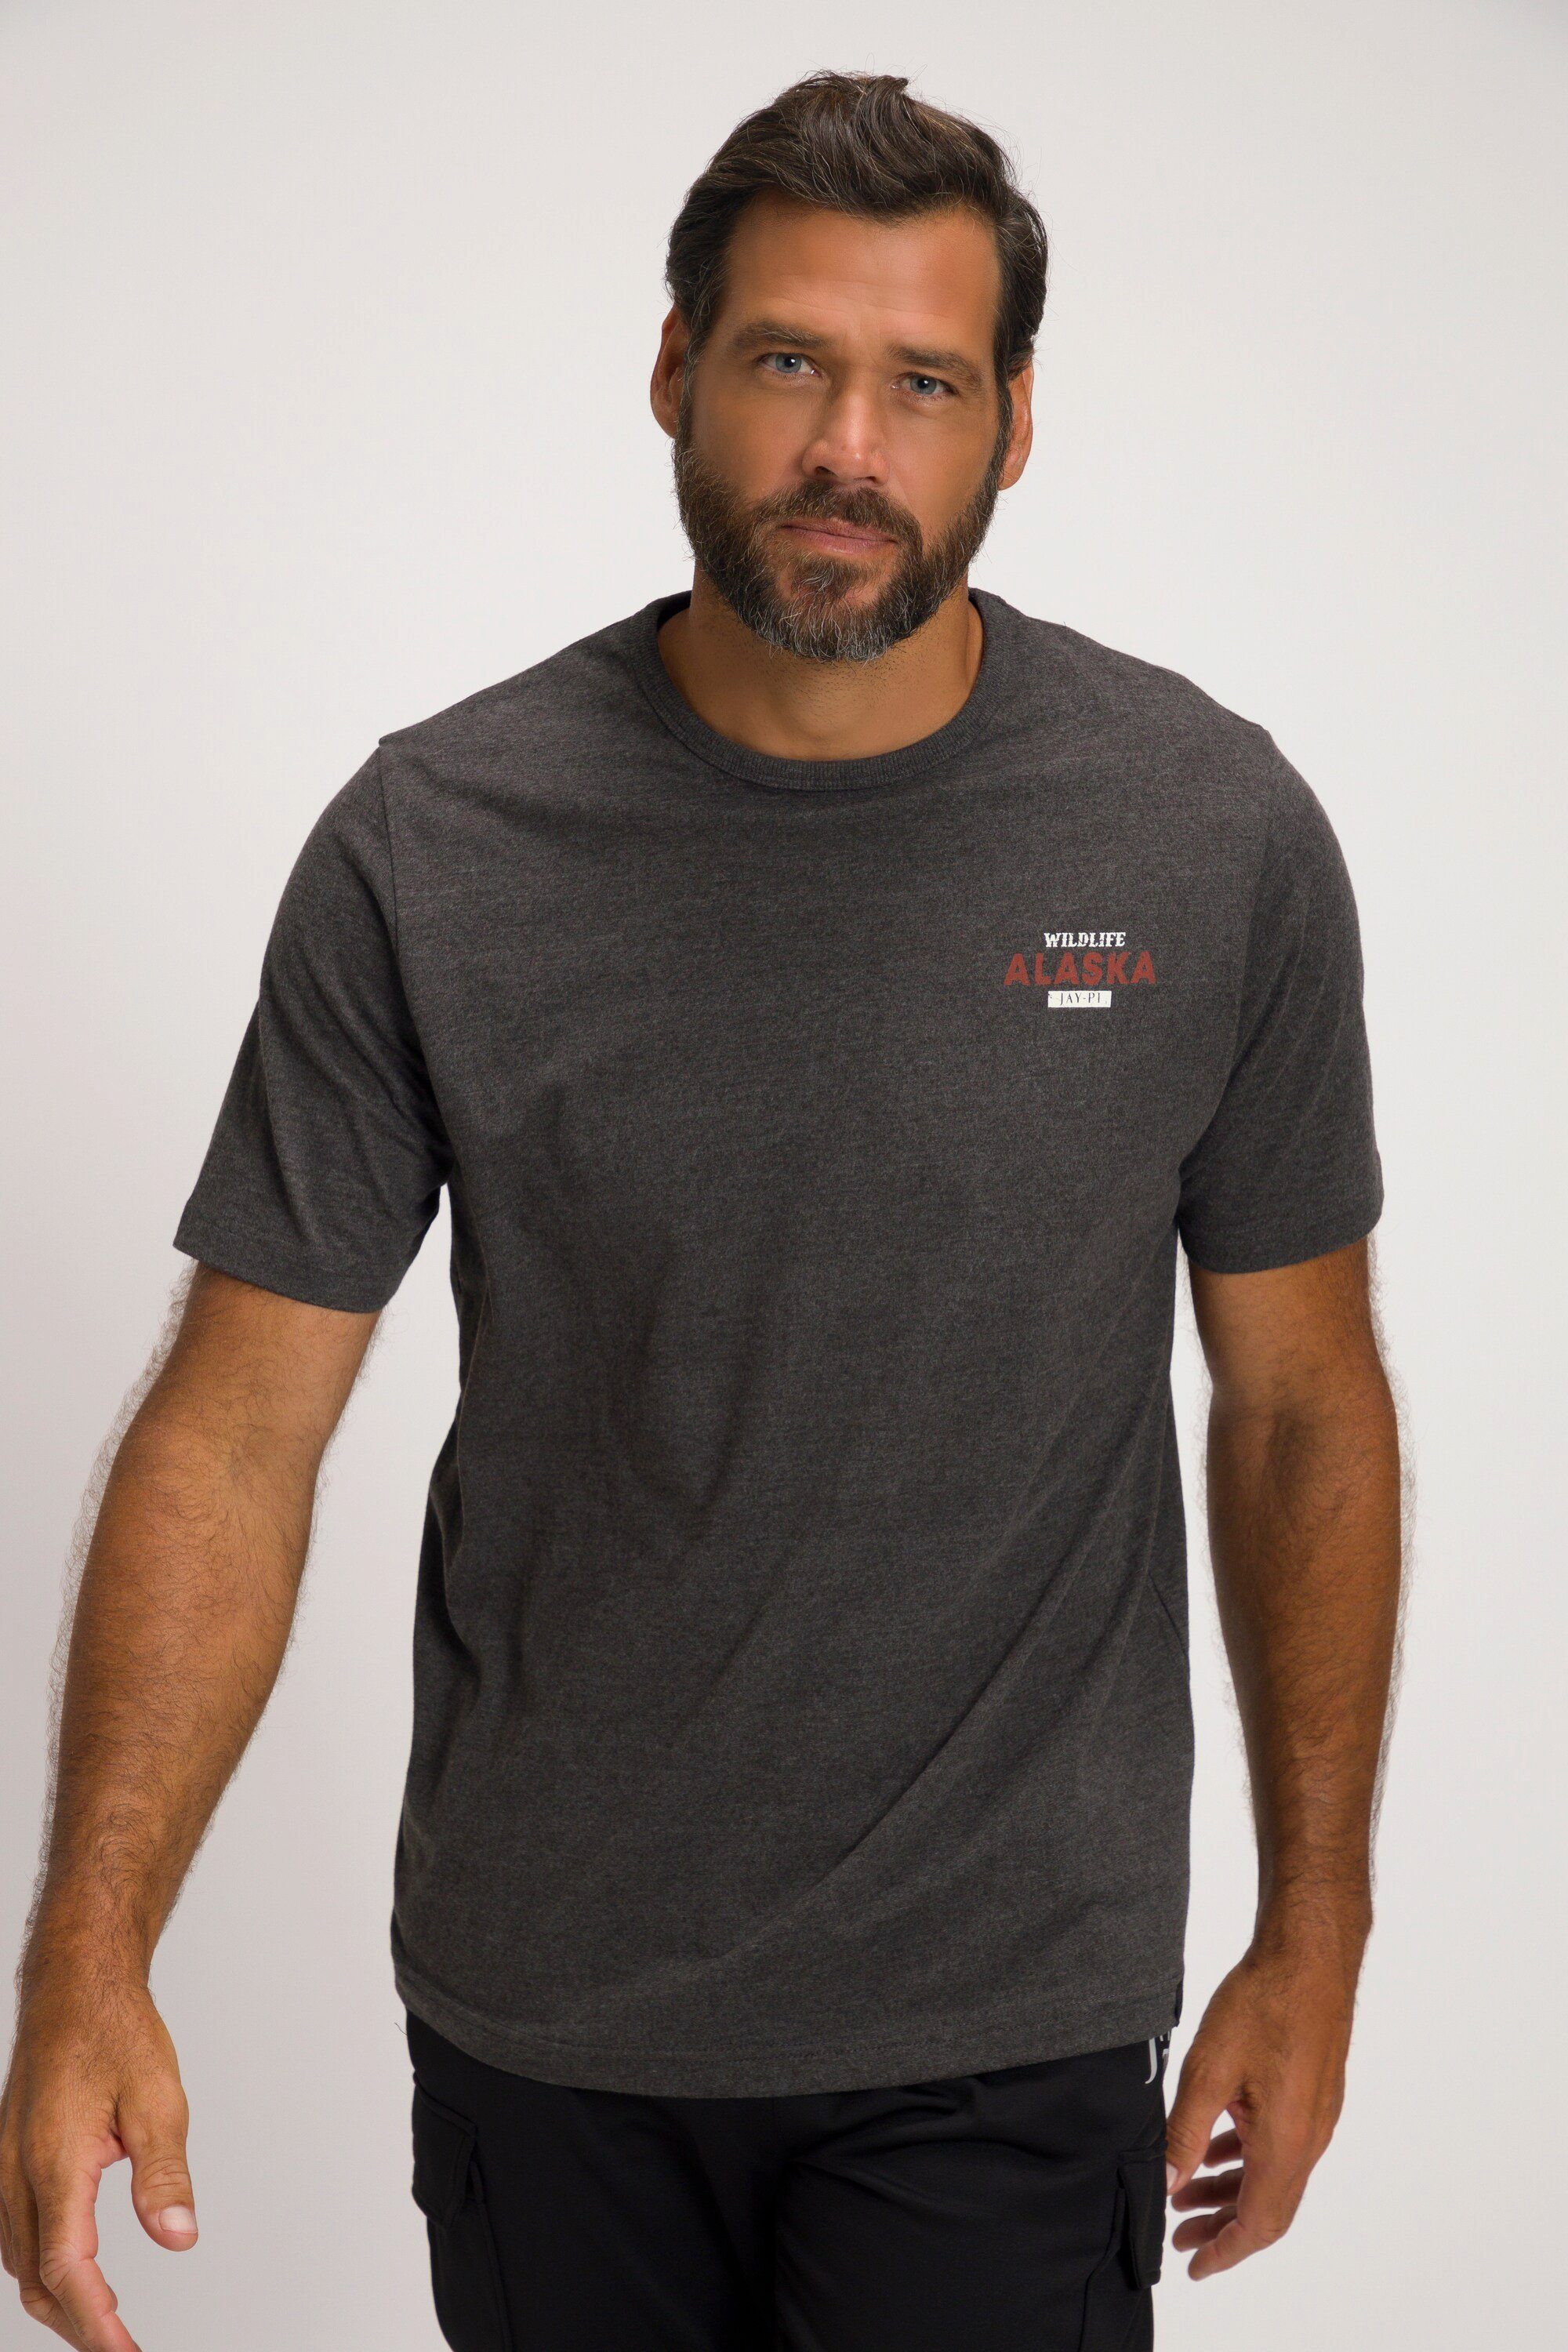 JP1880 T-Shirt Trekking-Shirt Outdoor Halbarm Print